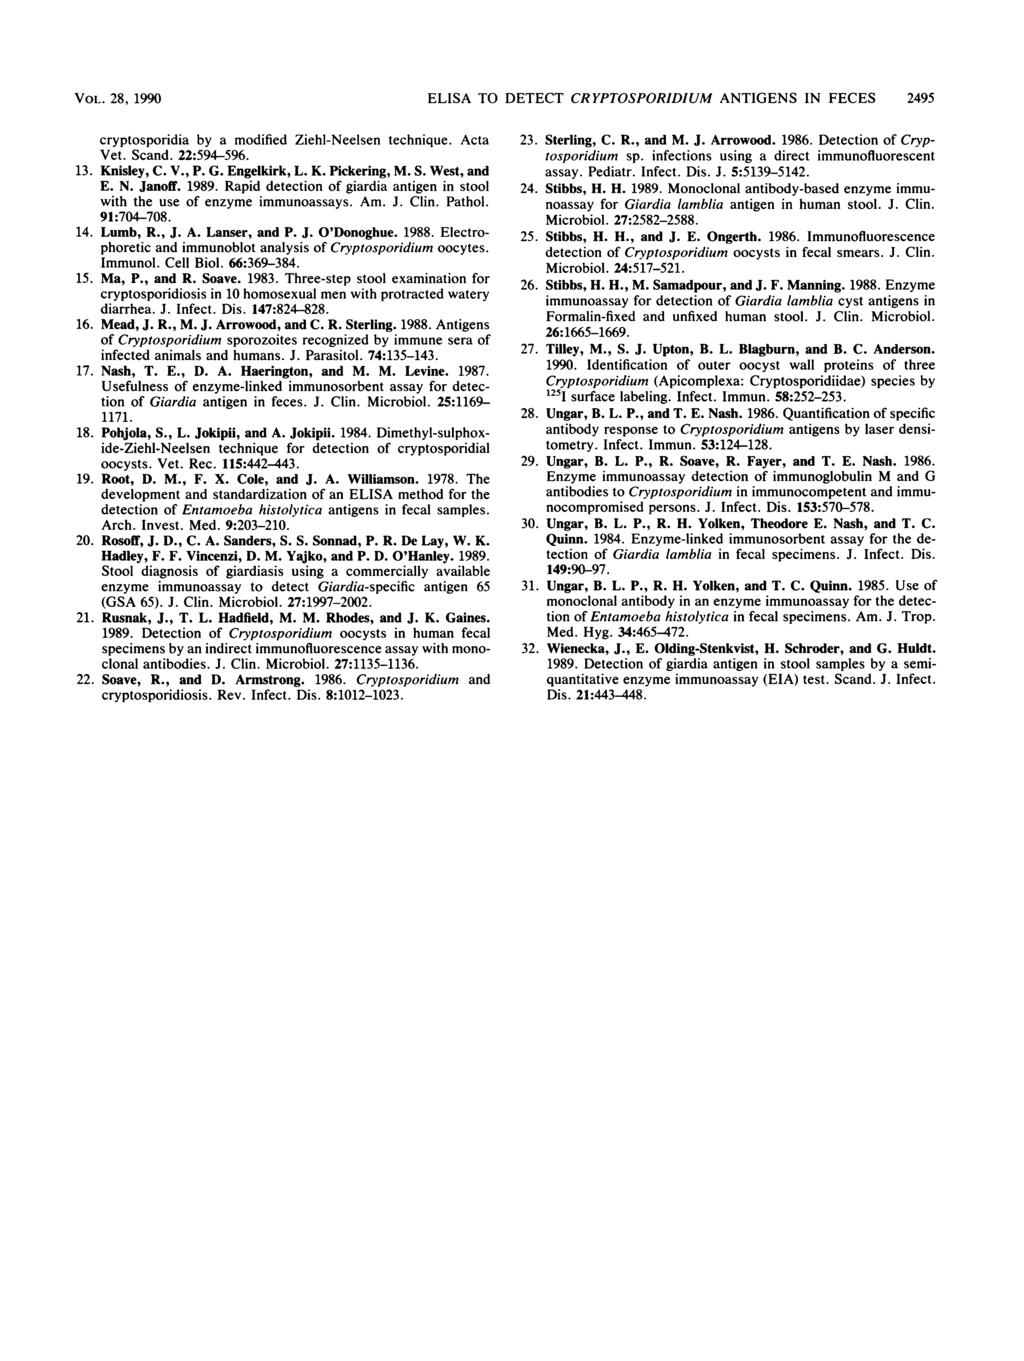 VOL. 28, 1990 ELISA TO DETECT CRYPTOSPORIDIUM ANTIGENS IN FECES 2495 cryptosporidia by a modified Ziehl-Neelsen technique. Acta Vet. Scand. 22:594-596. 13. Knisley, C. V., P. G. Engelkirk, L. K. Pickering, M.